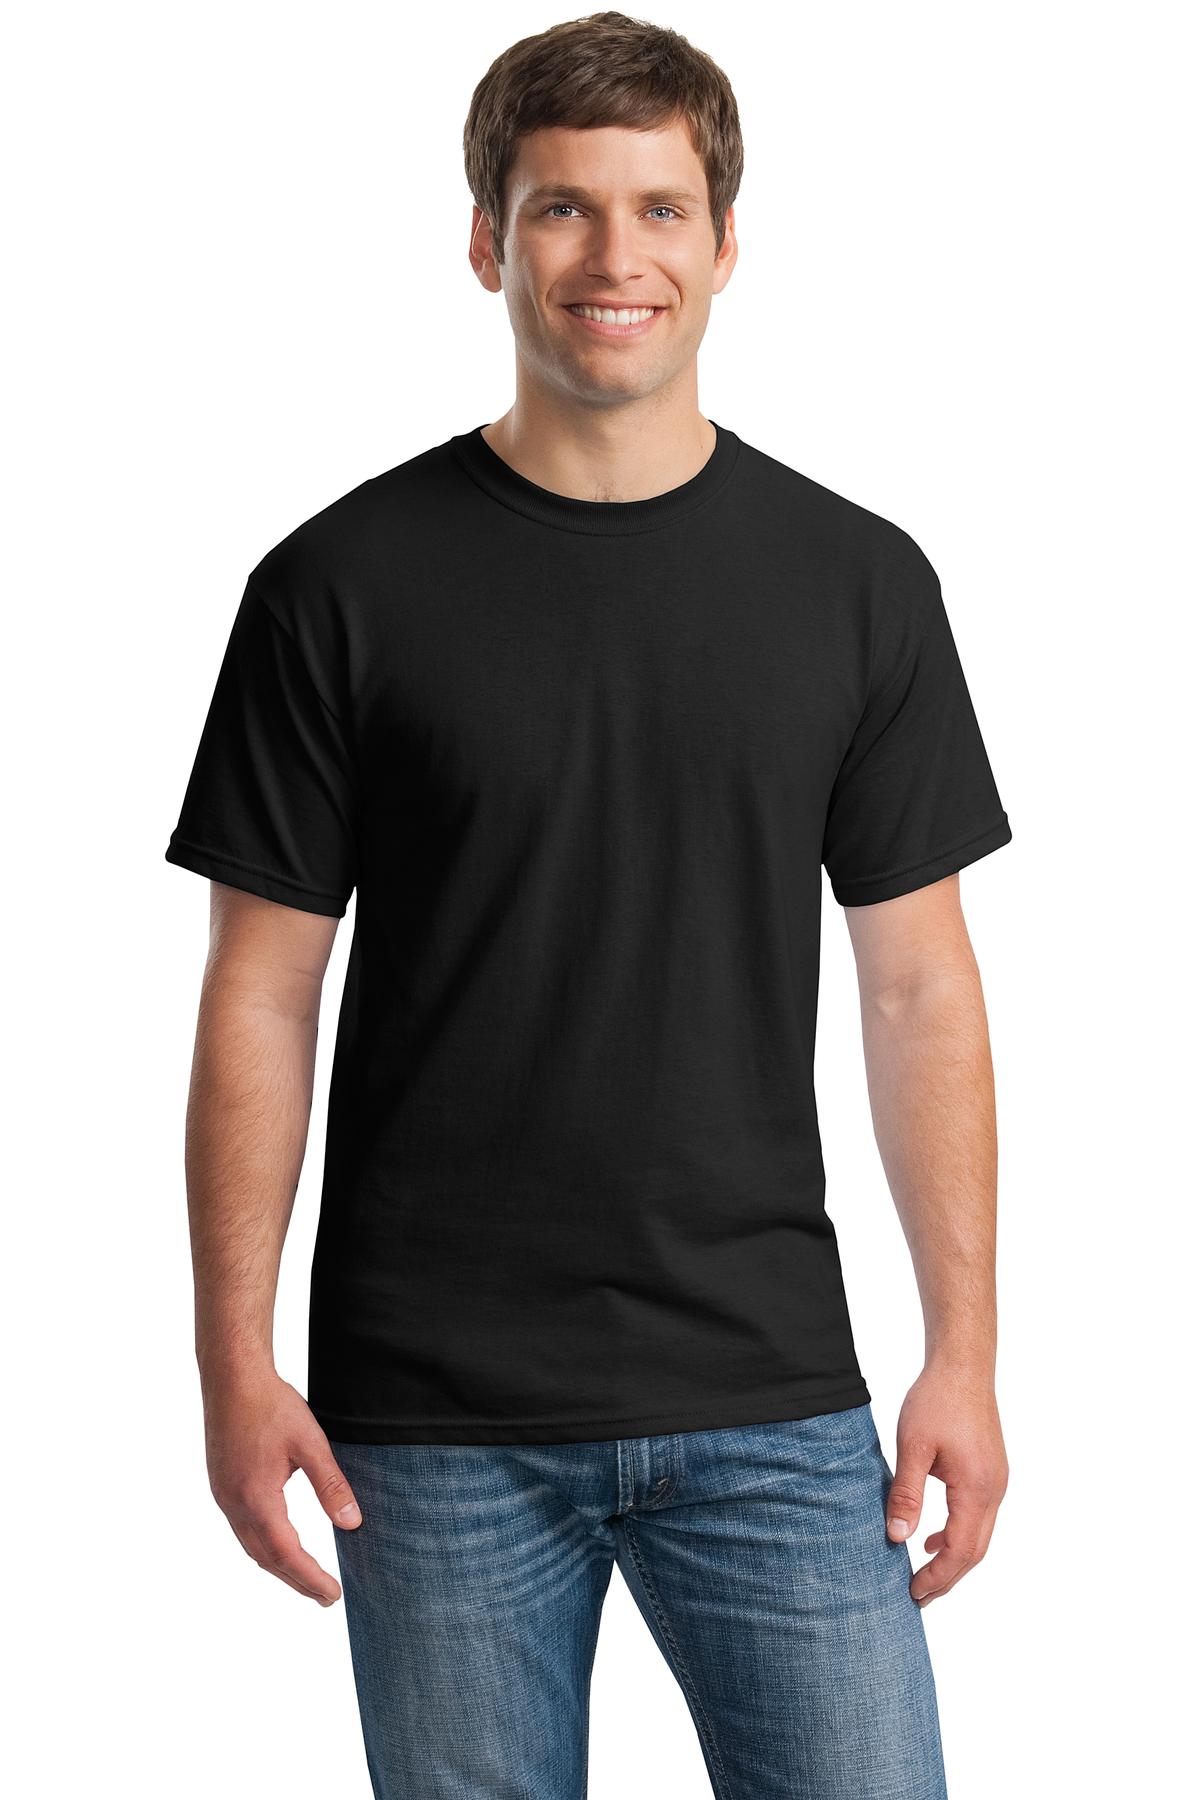 NIB - Men's T-Shirt Short Sleeve, up to Men Size 5XL - Dallas - image 2 of 5